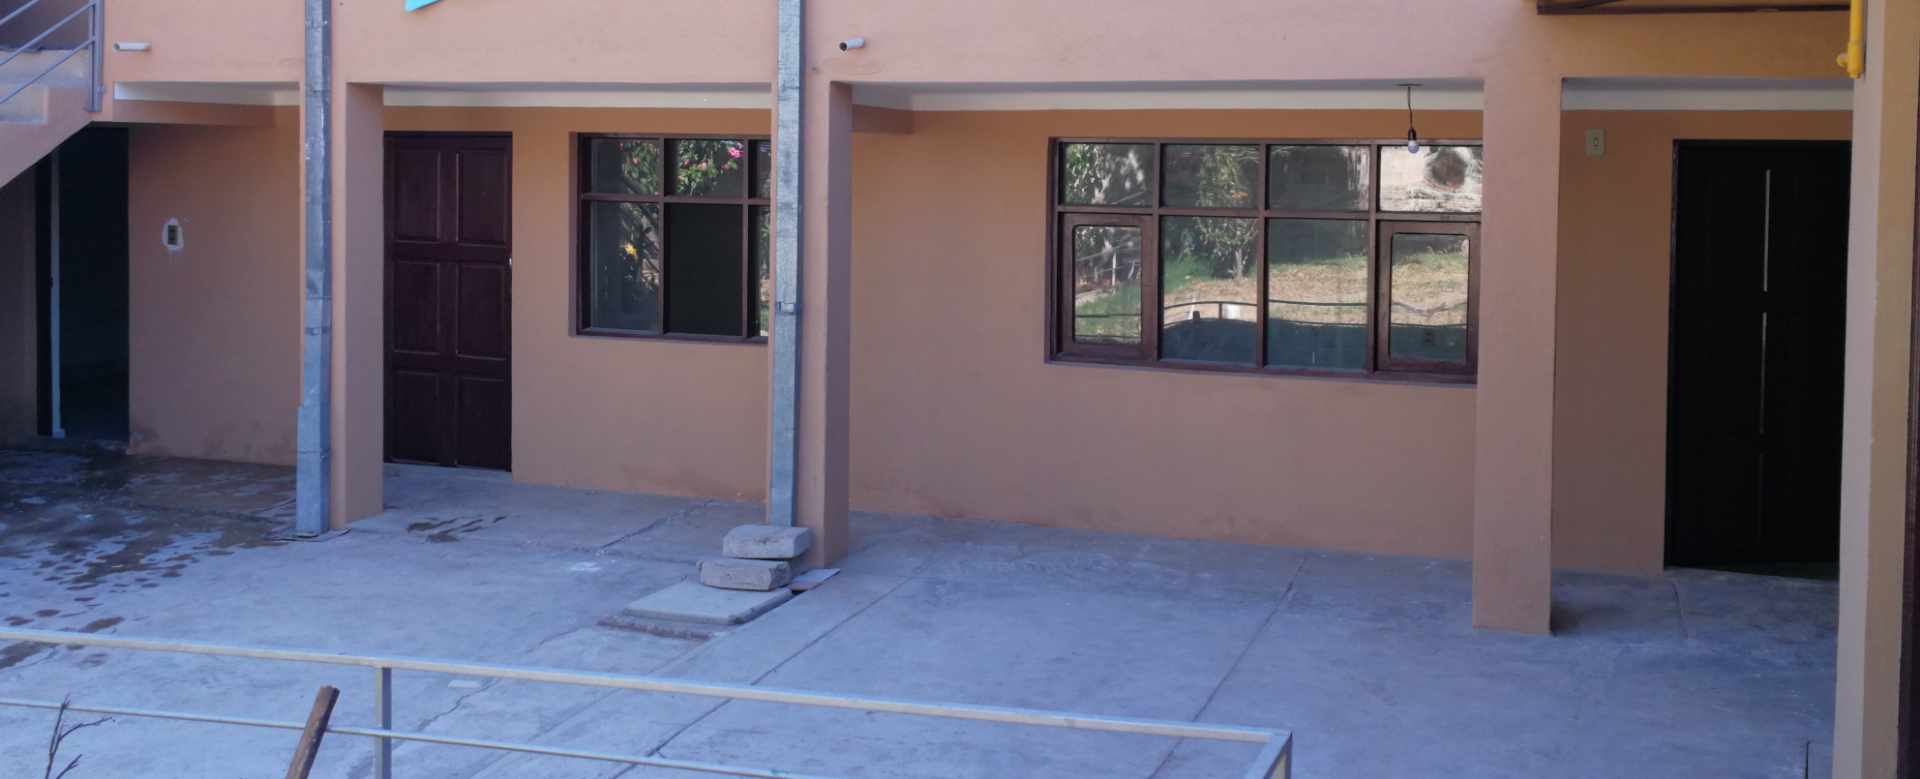 Departamento en AlquilerCochabamba, zona norte, circunvalacion, Hernan Siles 2 dormitorios 1 baños  Foto 8